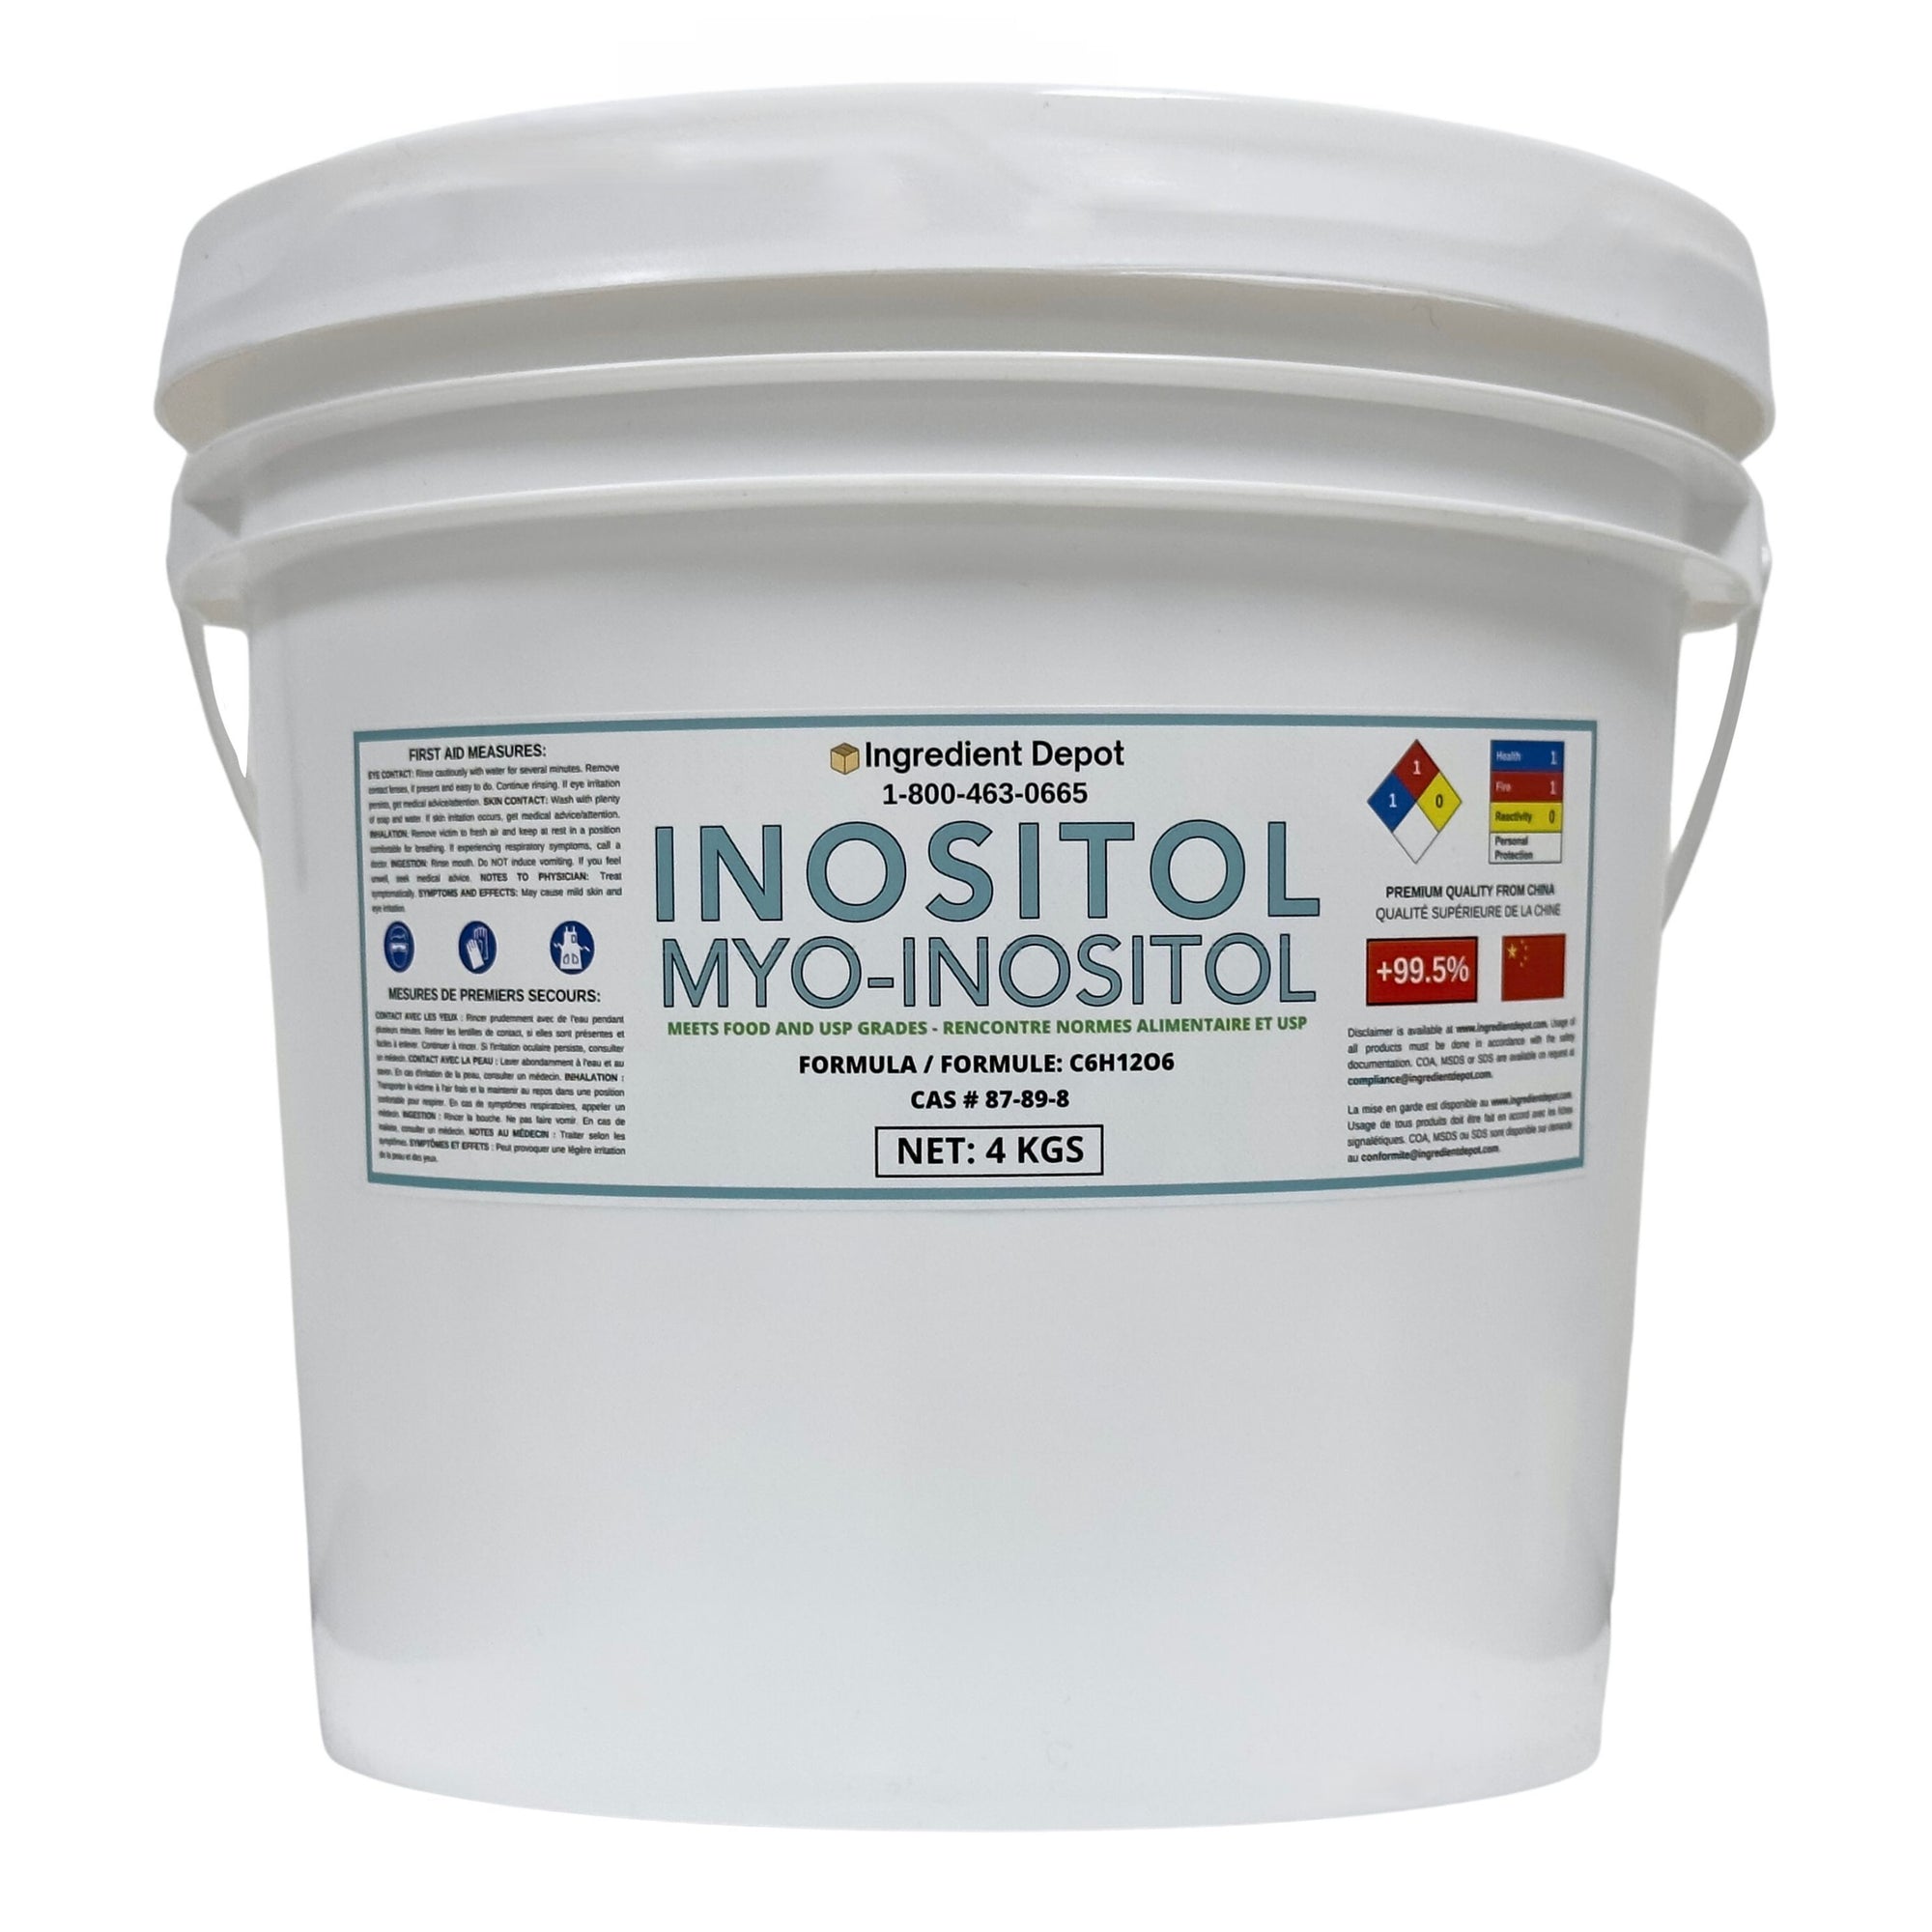 Inositol (myo-inositol), Food and USP Grade 4 kgs